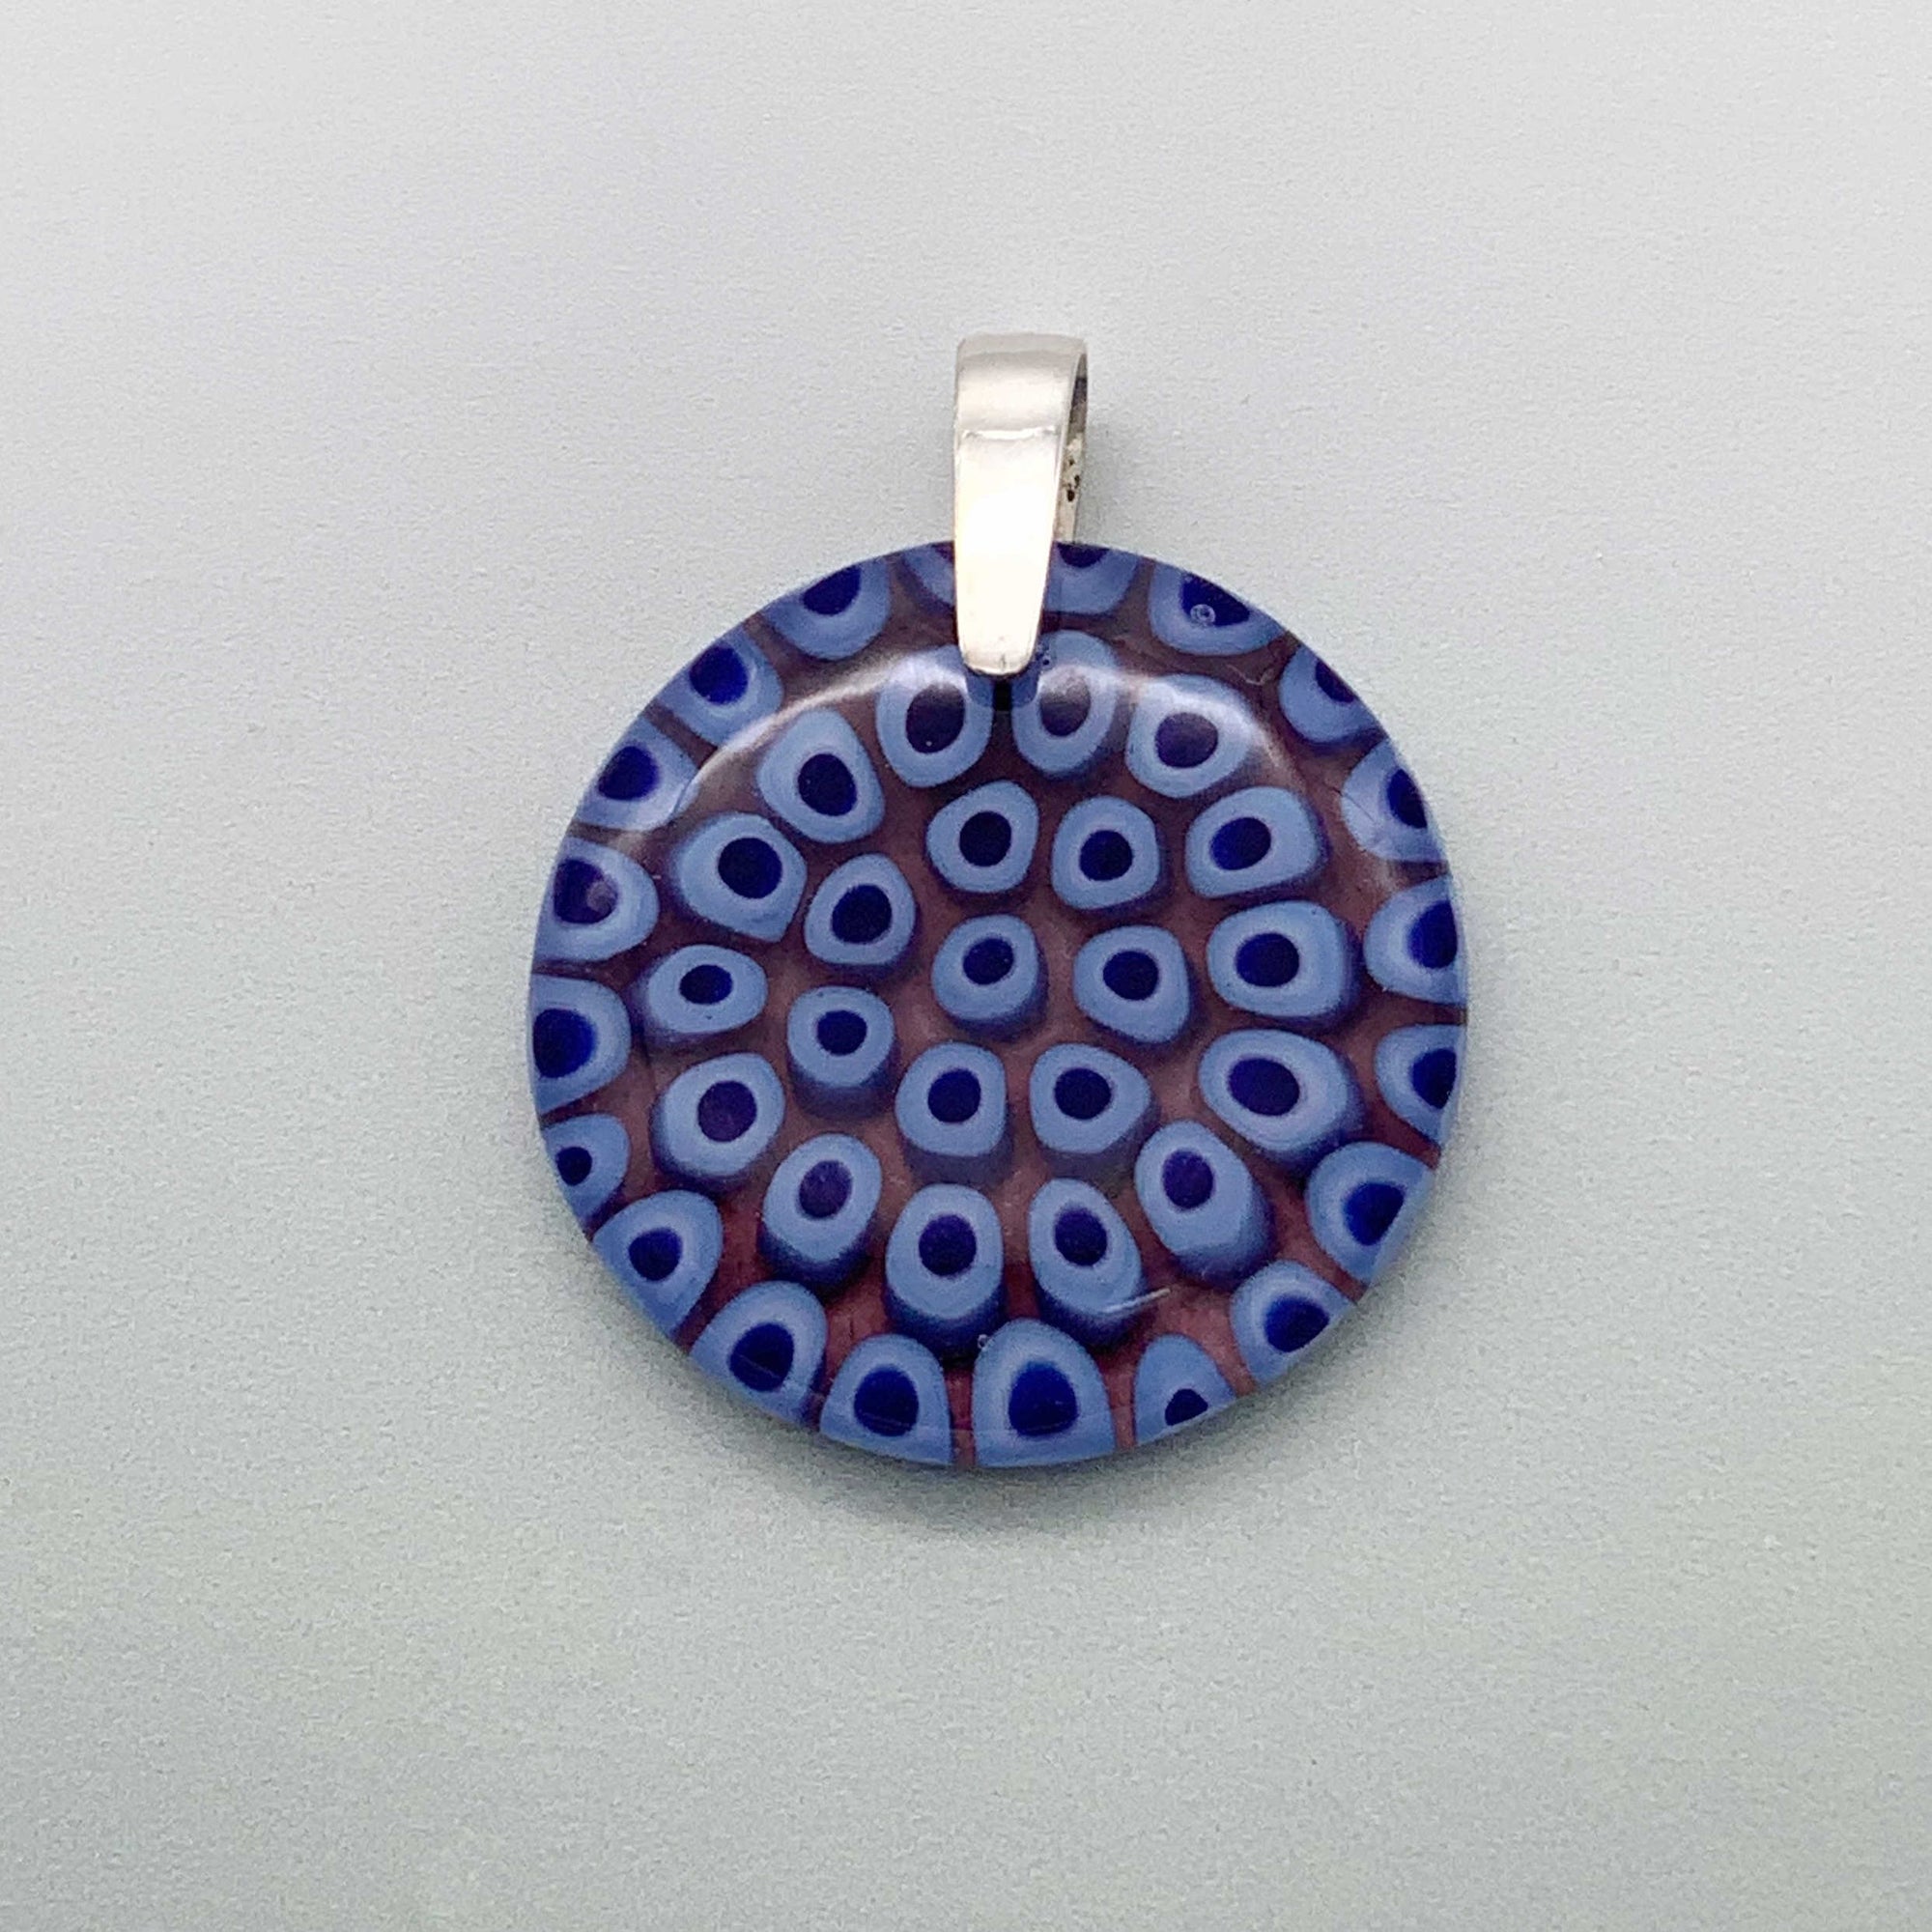 Blue Caviar 35mm round glass pendant with a plum undertone